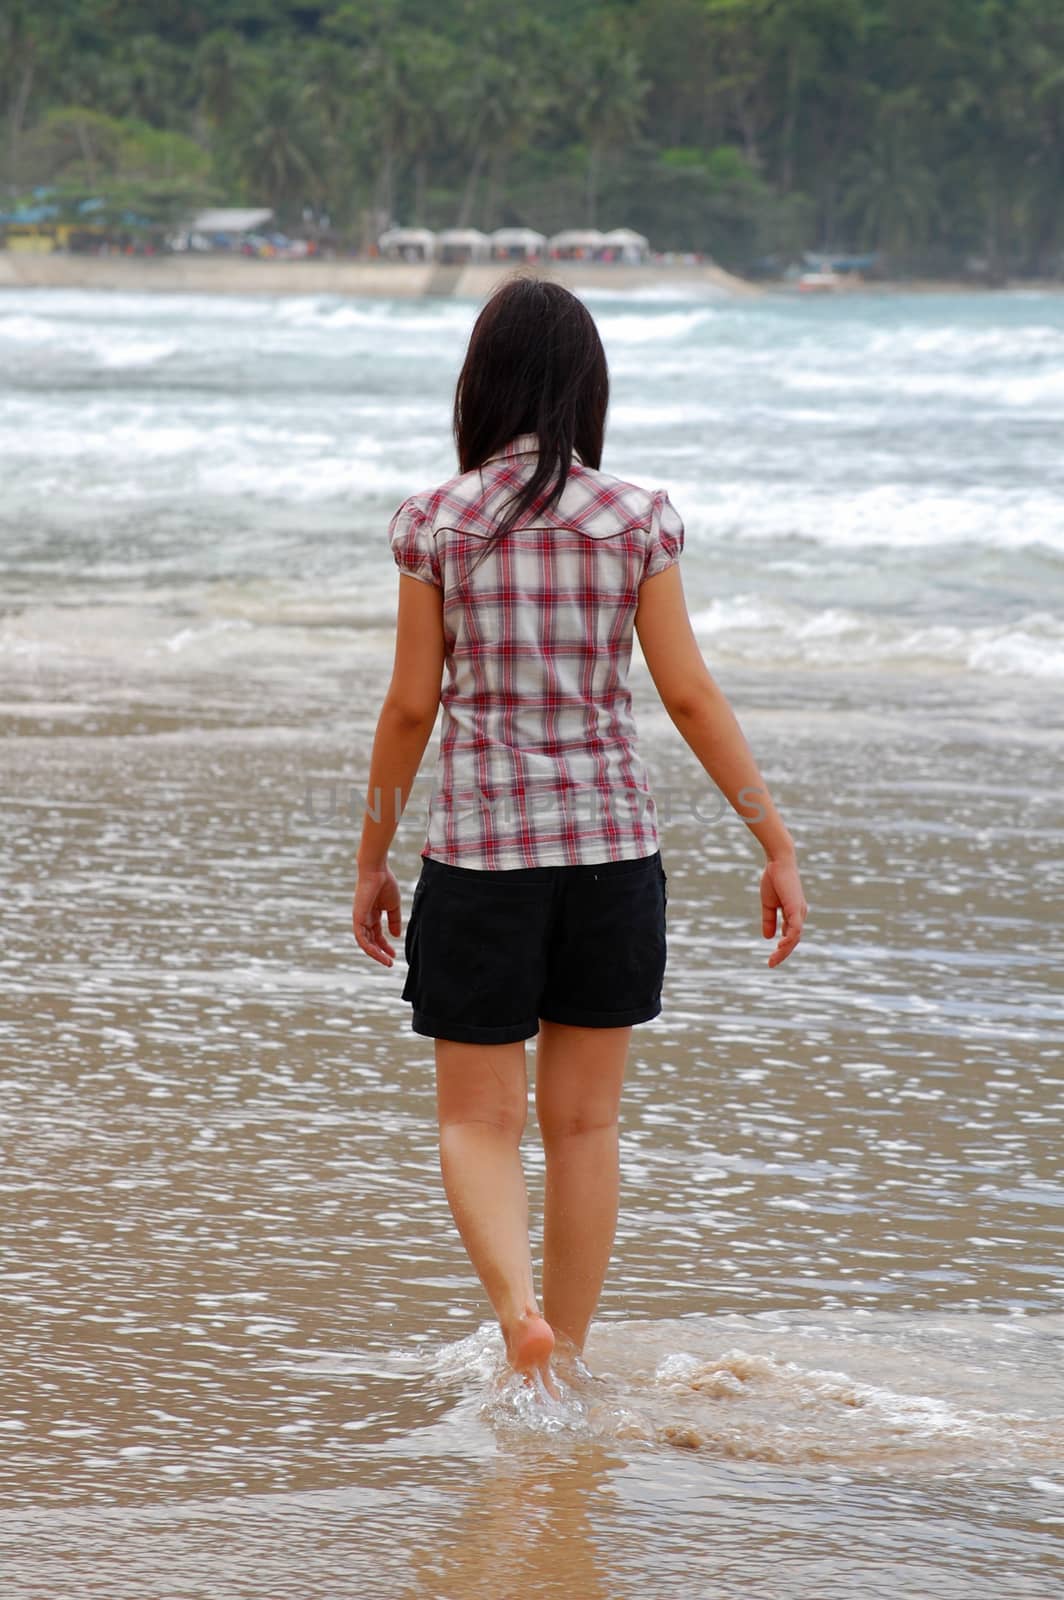 Woman walking on the beach water by imwaltersy